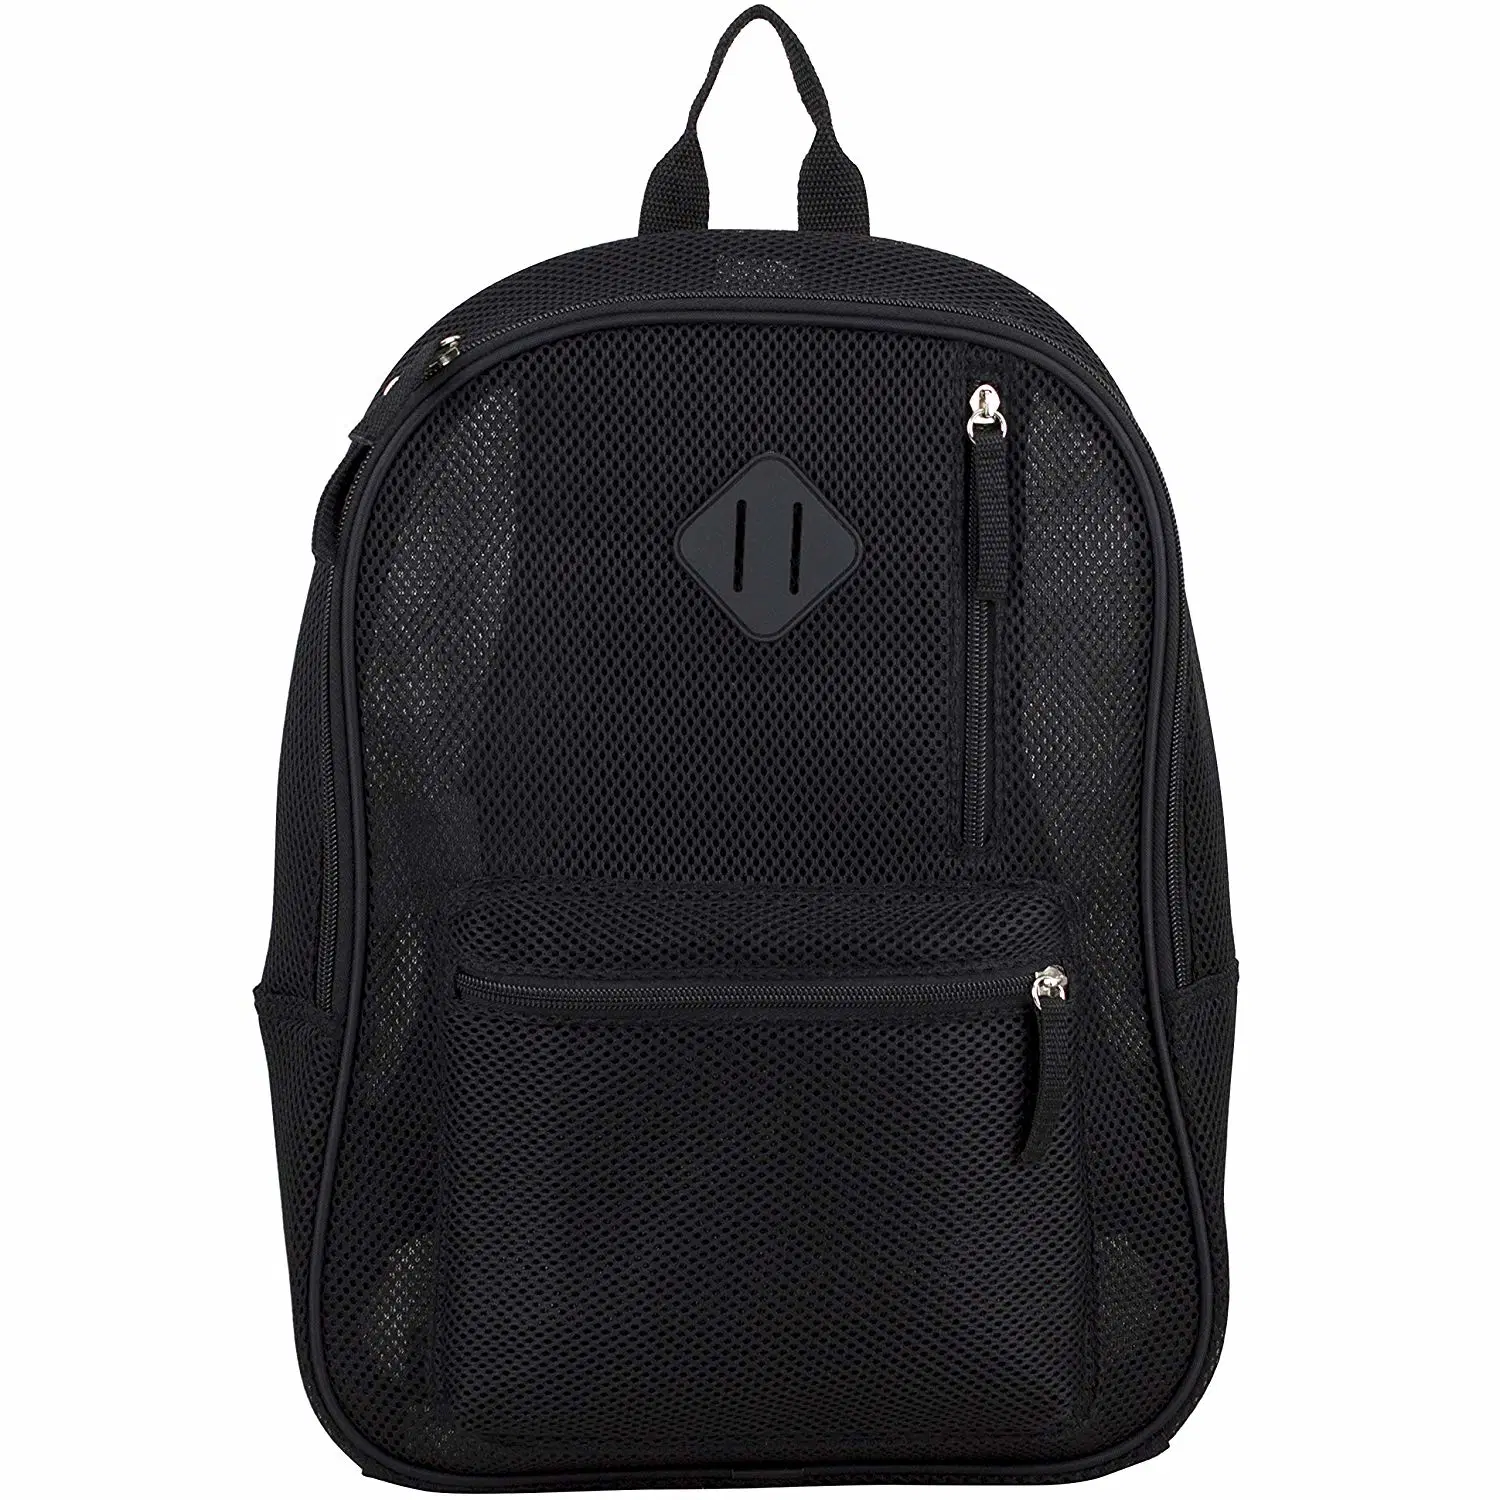 Semi Transparent Soft Comfortable Mesh Backpack with Padded Shoulder Straps